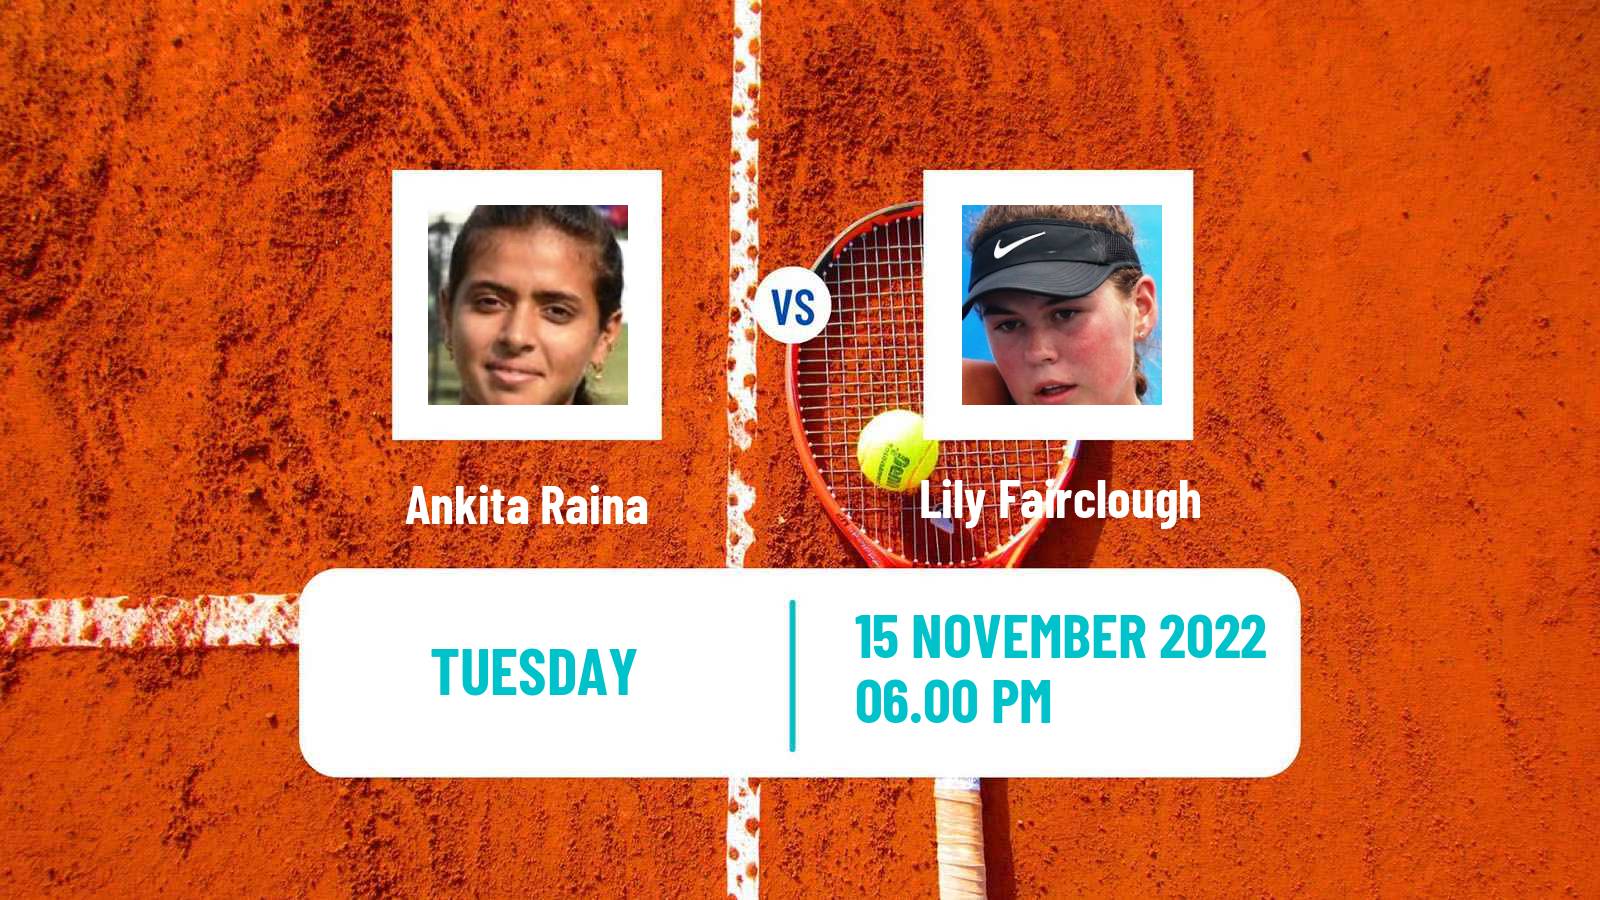 Tennis ITF Tournaments Ankita Raina - Lily Fairclough